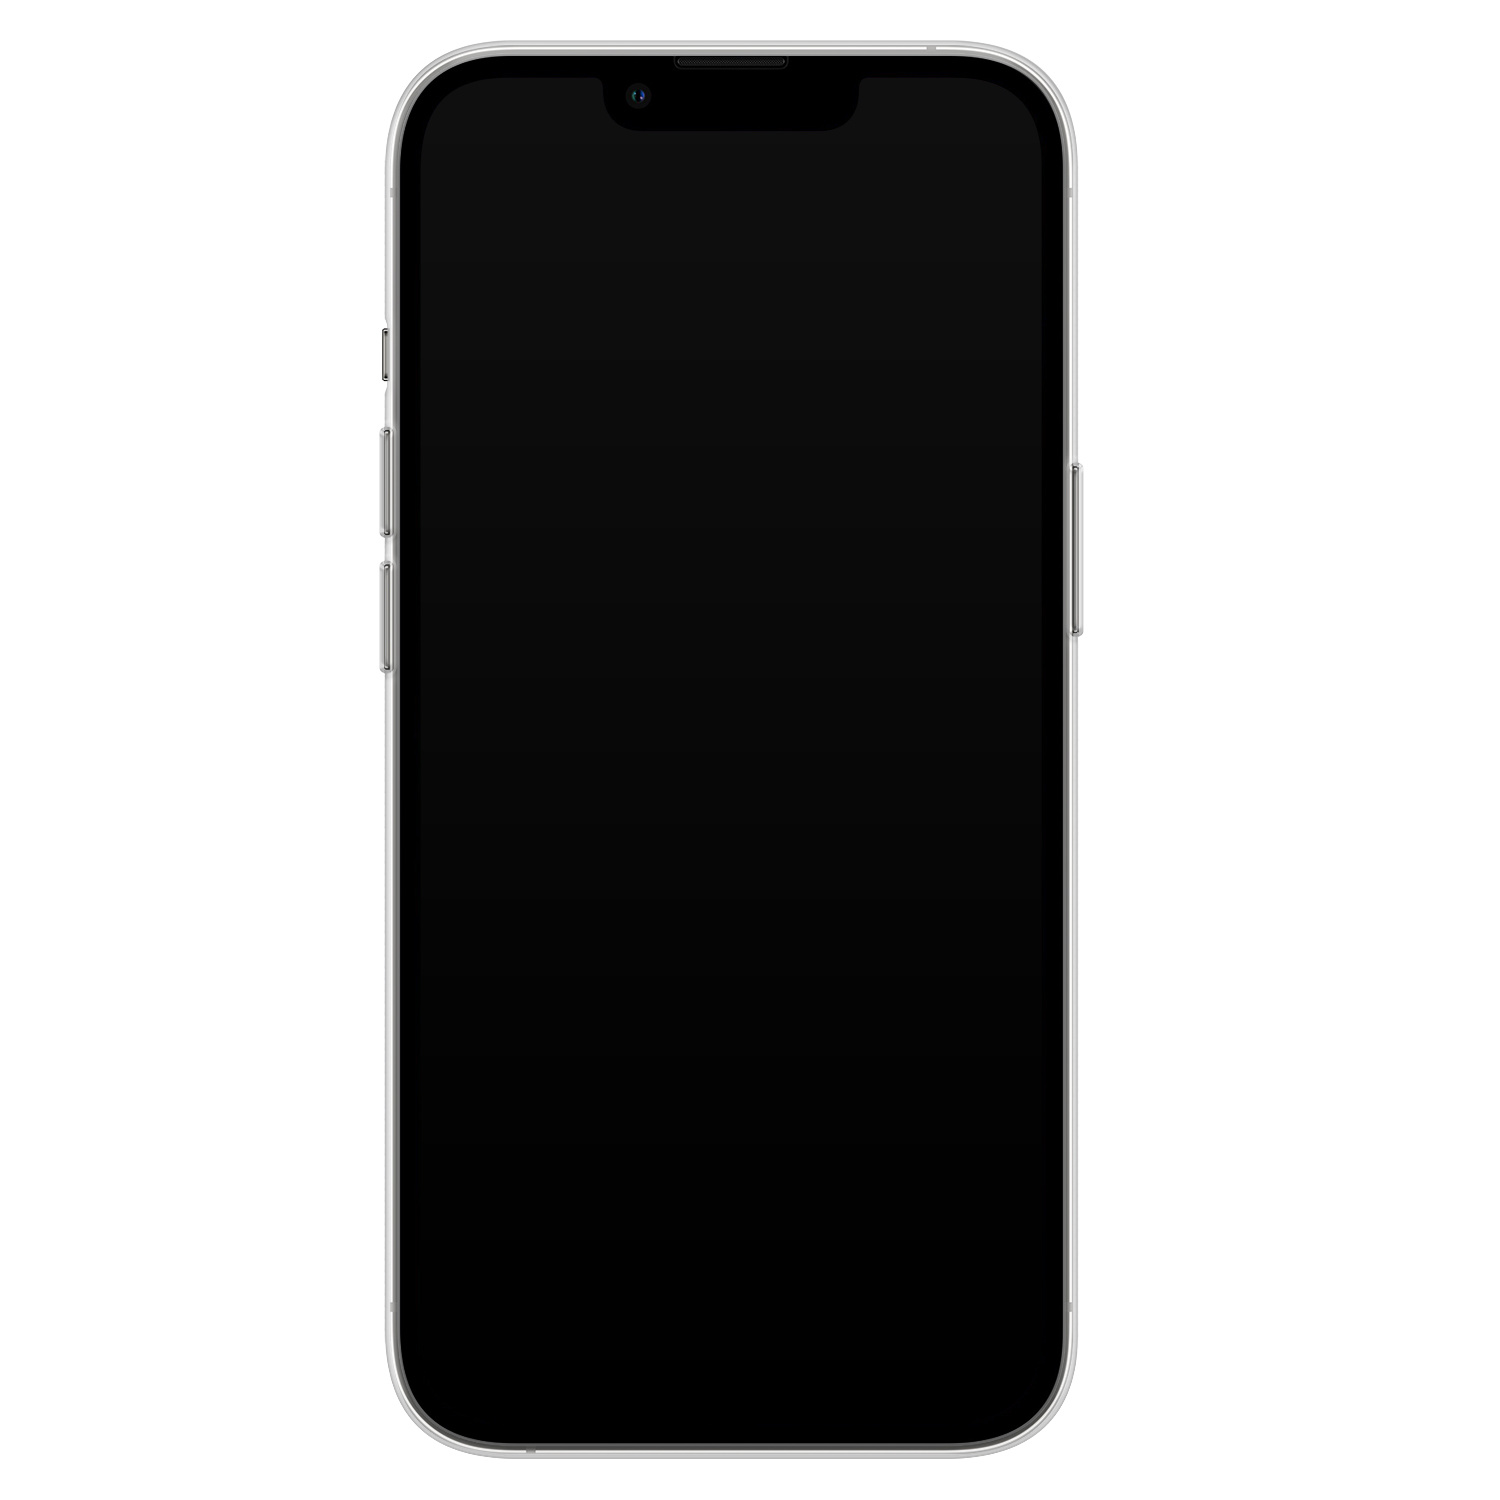 Leuke Telefoonhoesjes iPhone 13 Pro siliconen hoesje - Marmer blauw